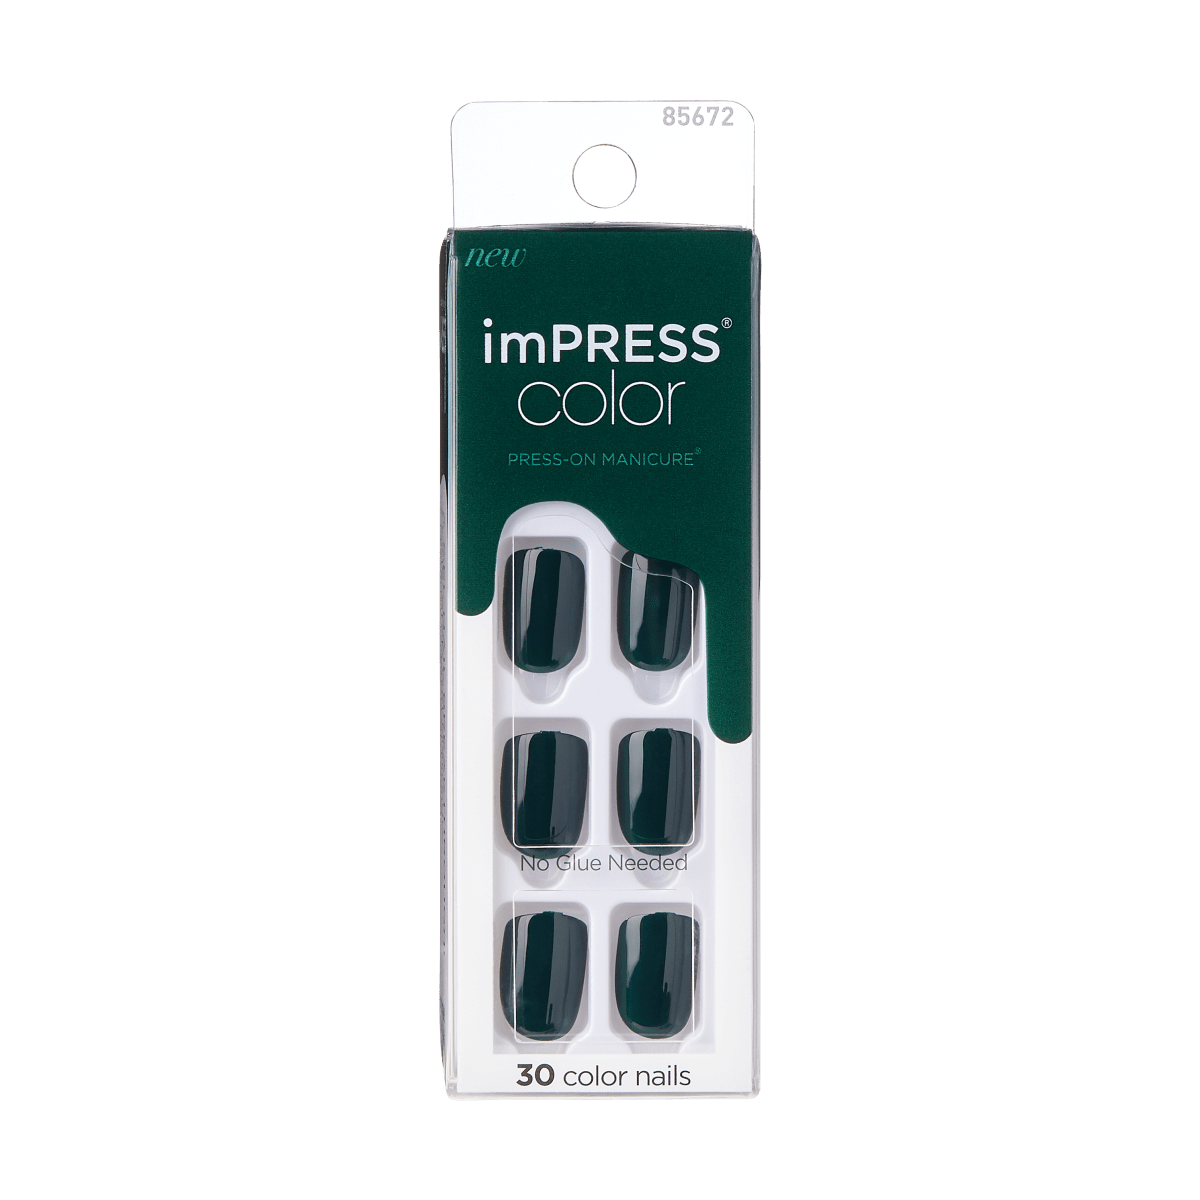 imPRESS Color Press-On Manicure - Emeralds